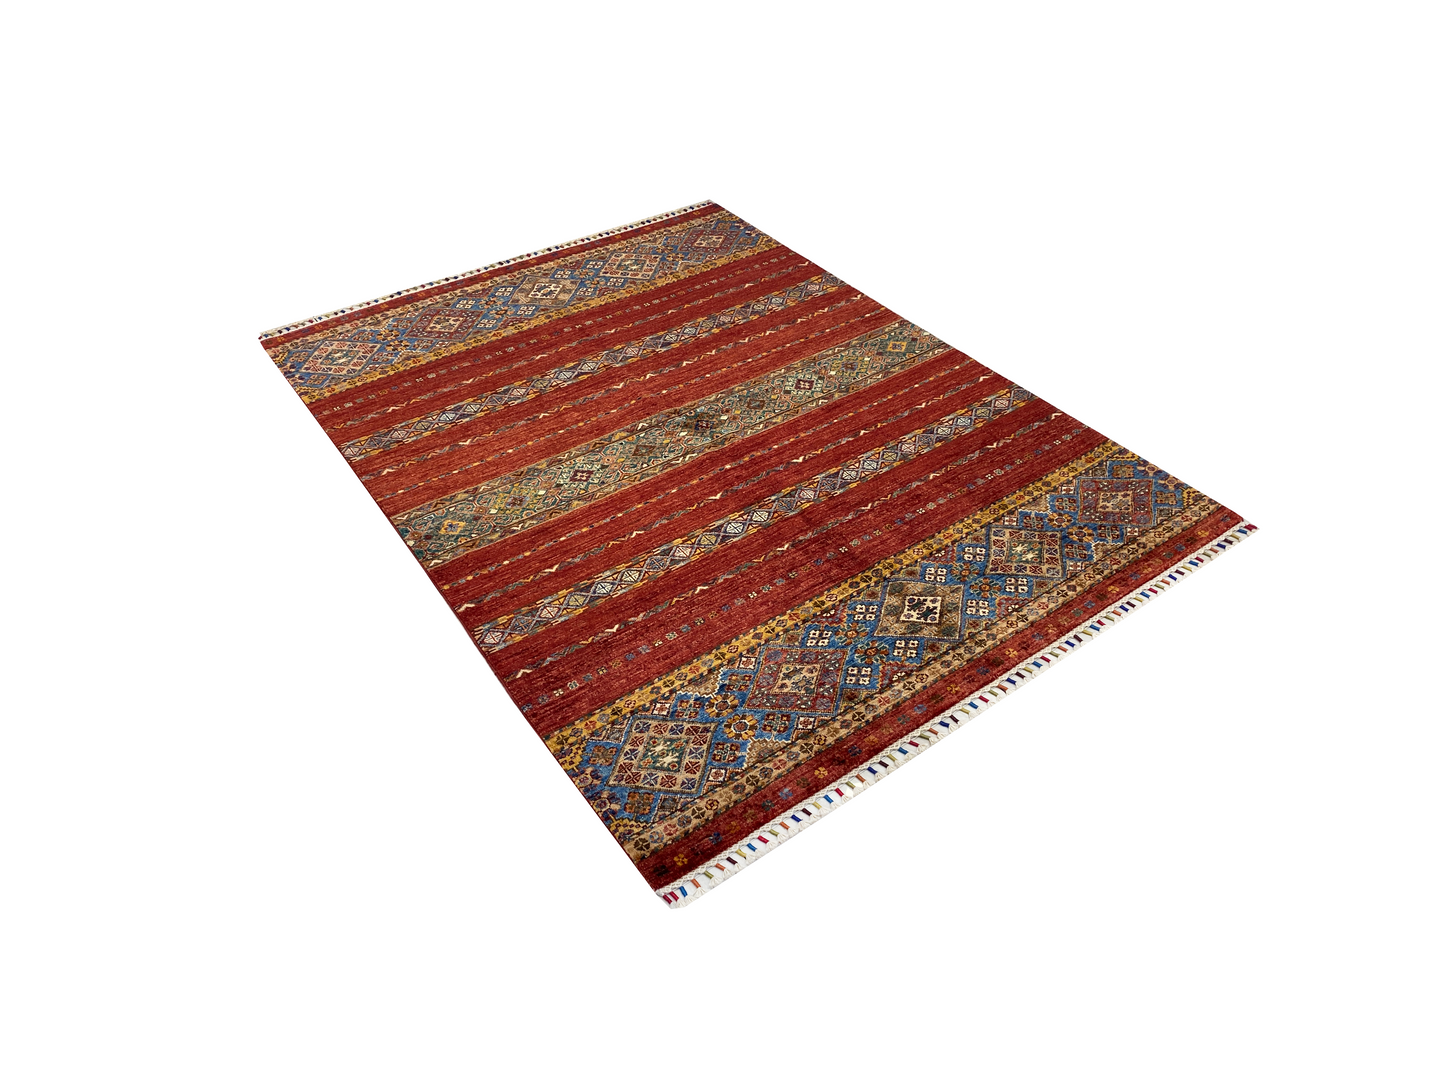 Şirvan Bicolor Carpet 208 x 154 cm